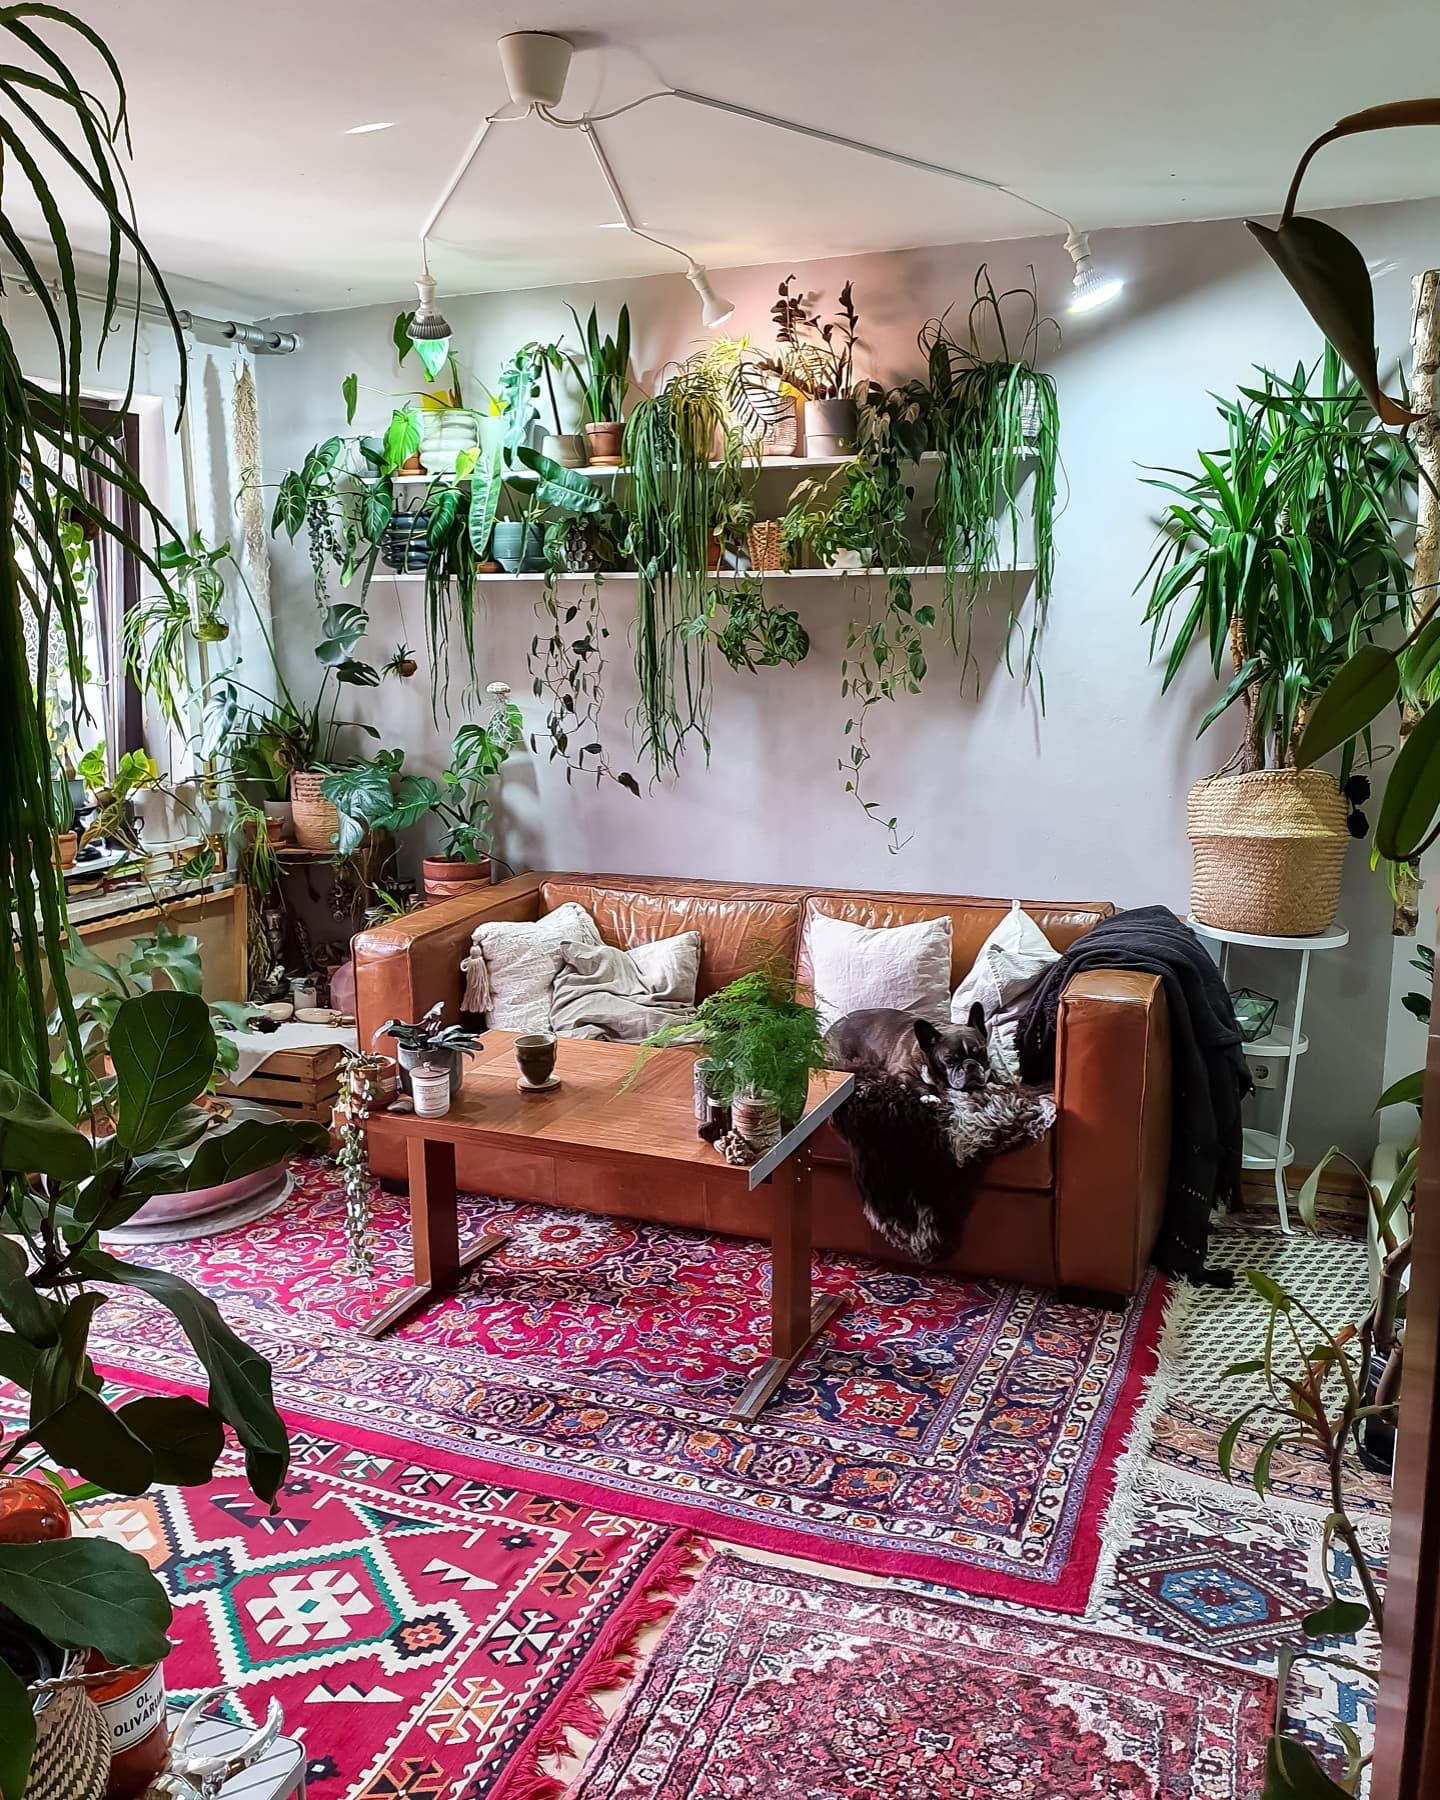 #Wohnzimmer #Pflanzen #Teppich #hygge #urbanjungle #Couch #Sofa #couchstyle #ledersofa #ledercouch